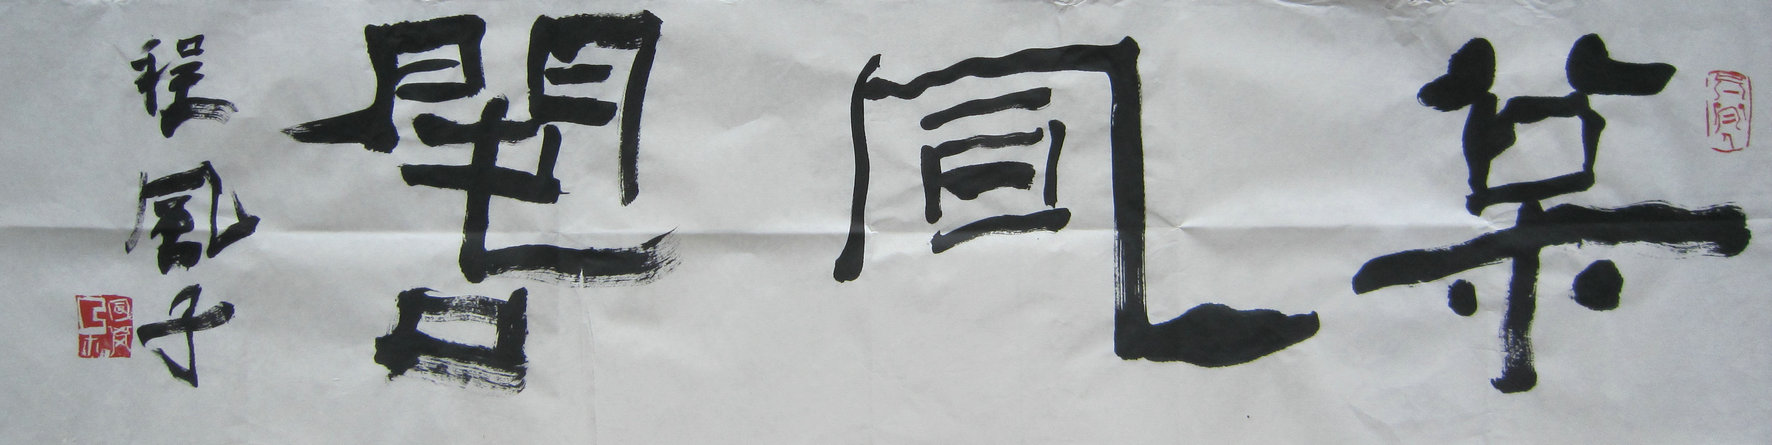 松风阁logo